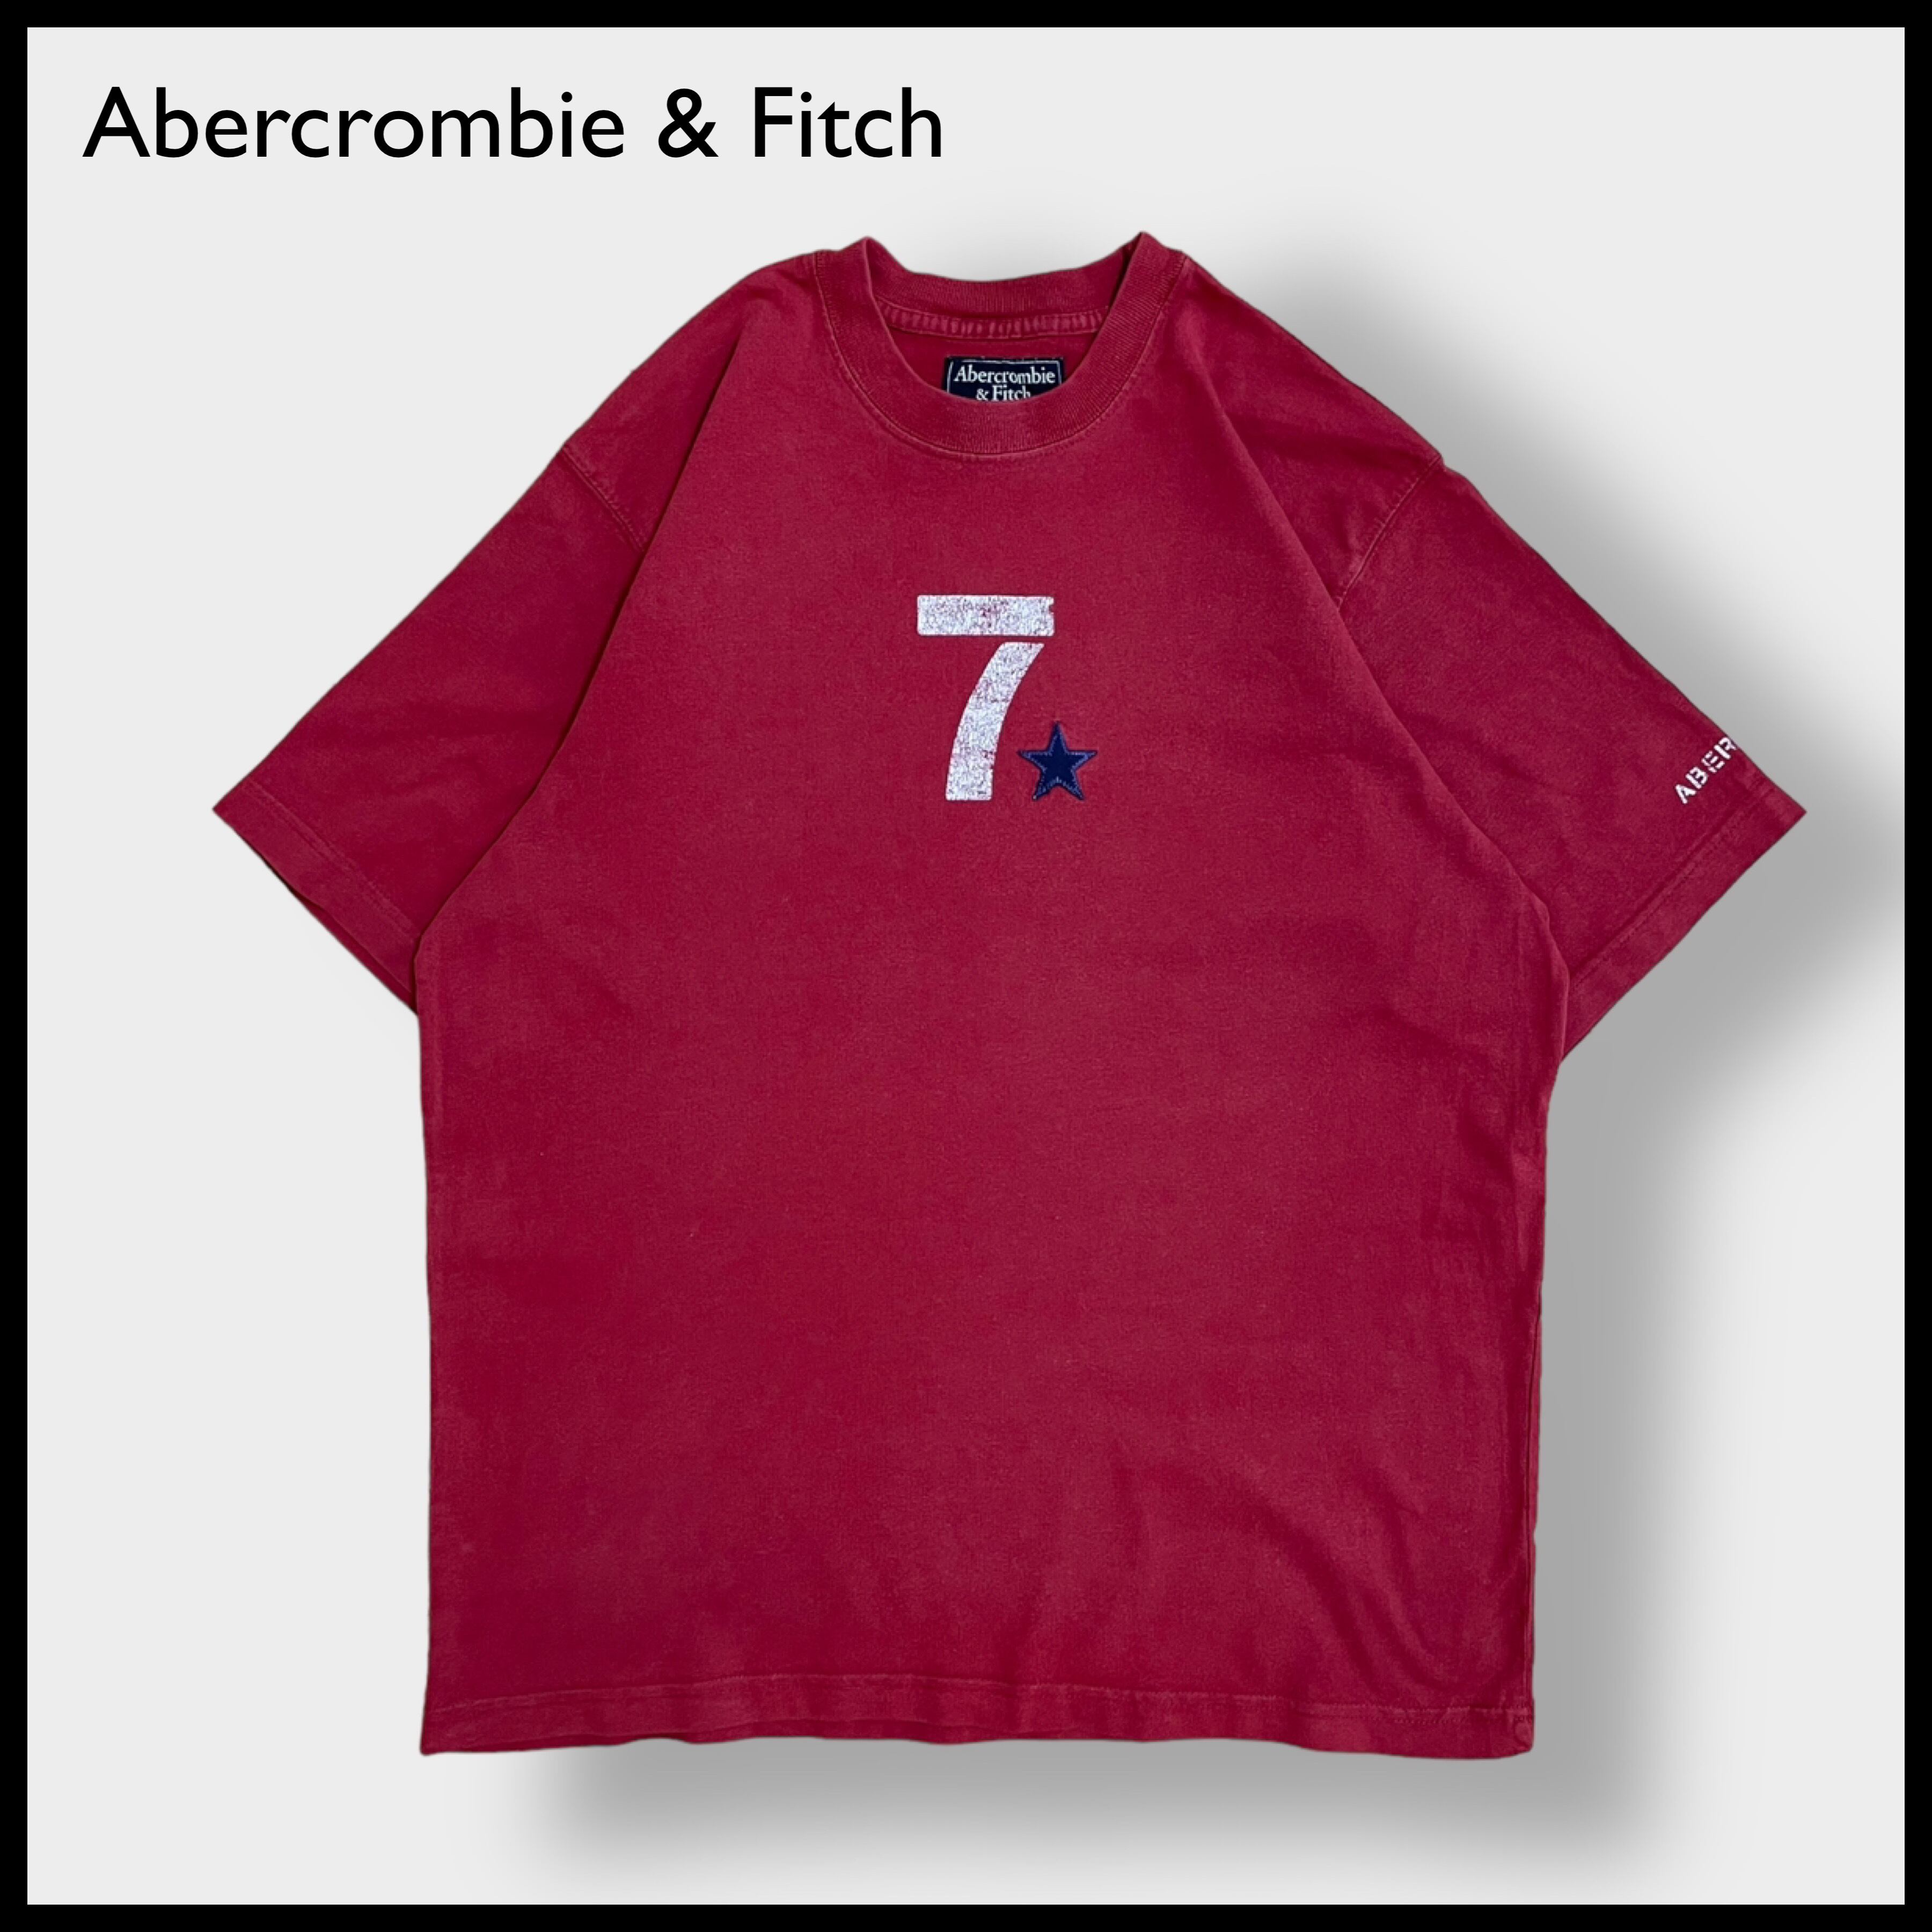 Abercrombie & Fitch】アバクロ Tシャツ ナンバリング プリント 星